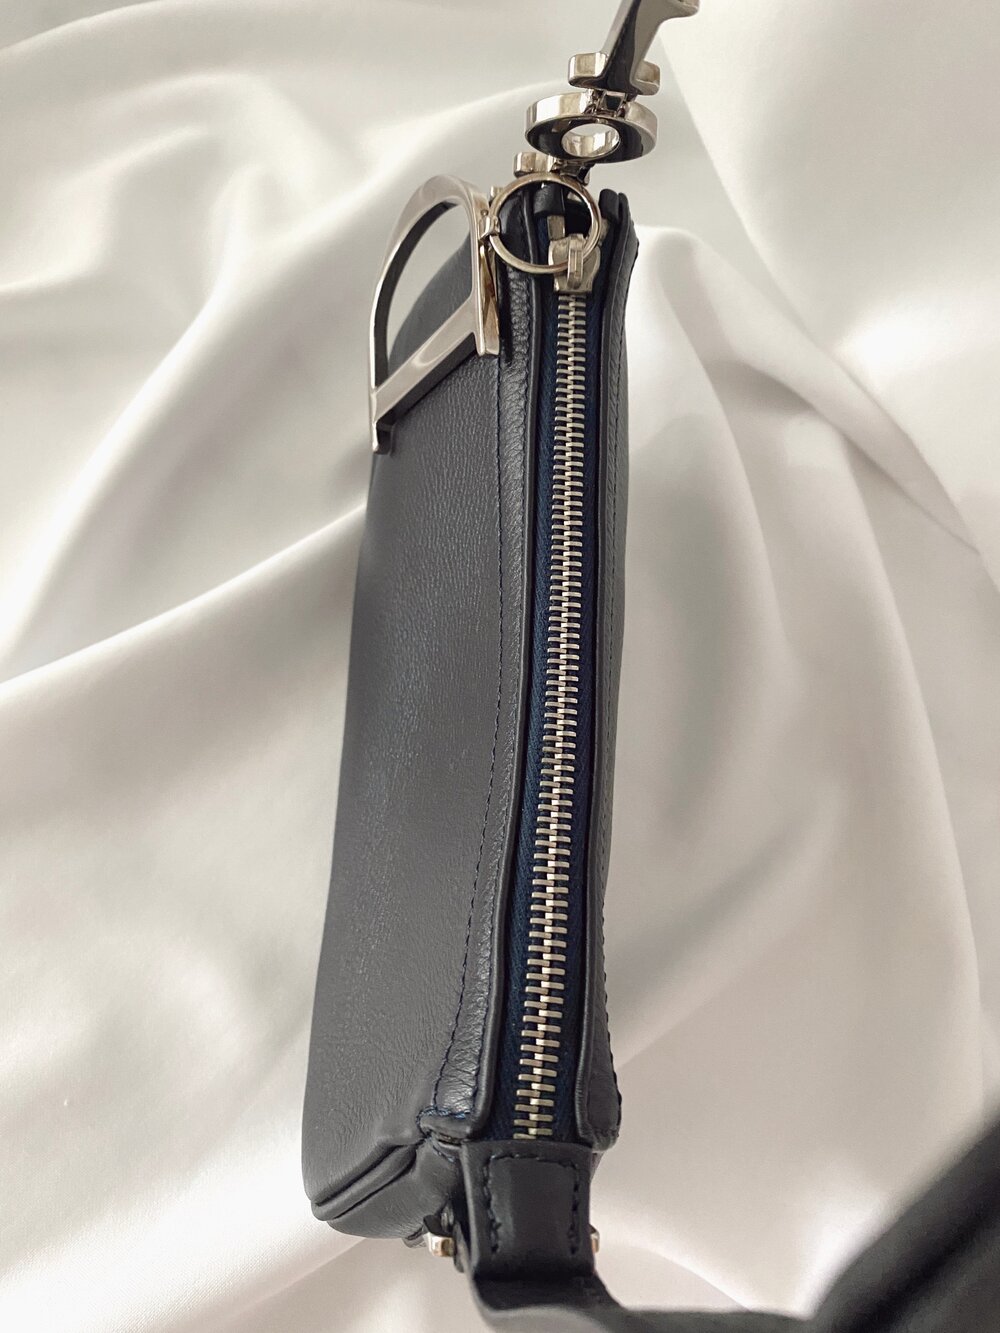 Dior Dior Black leather D charm pochette bag